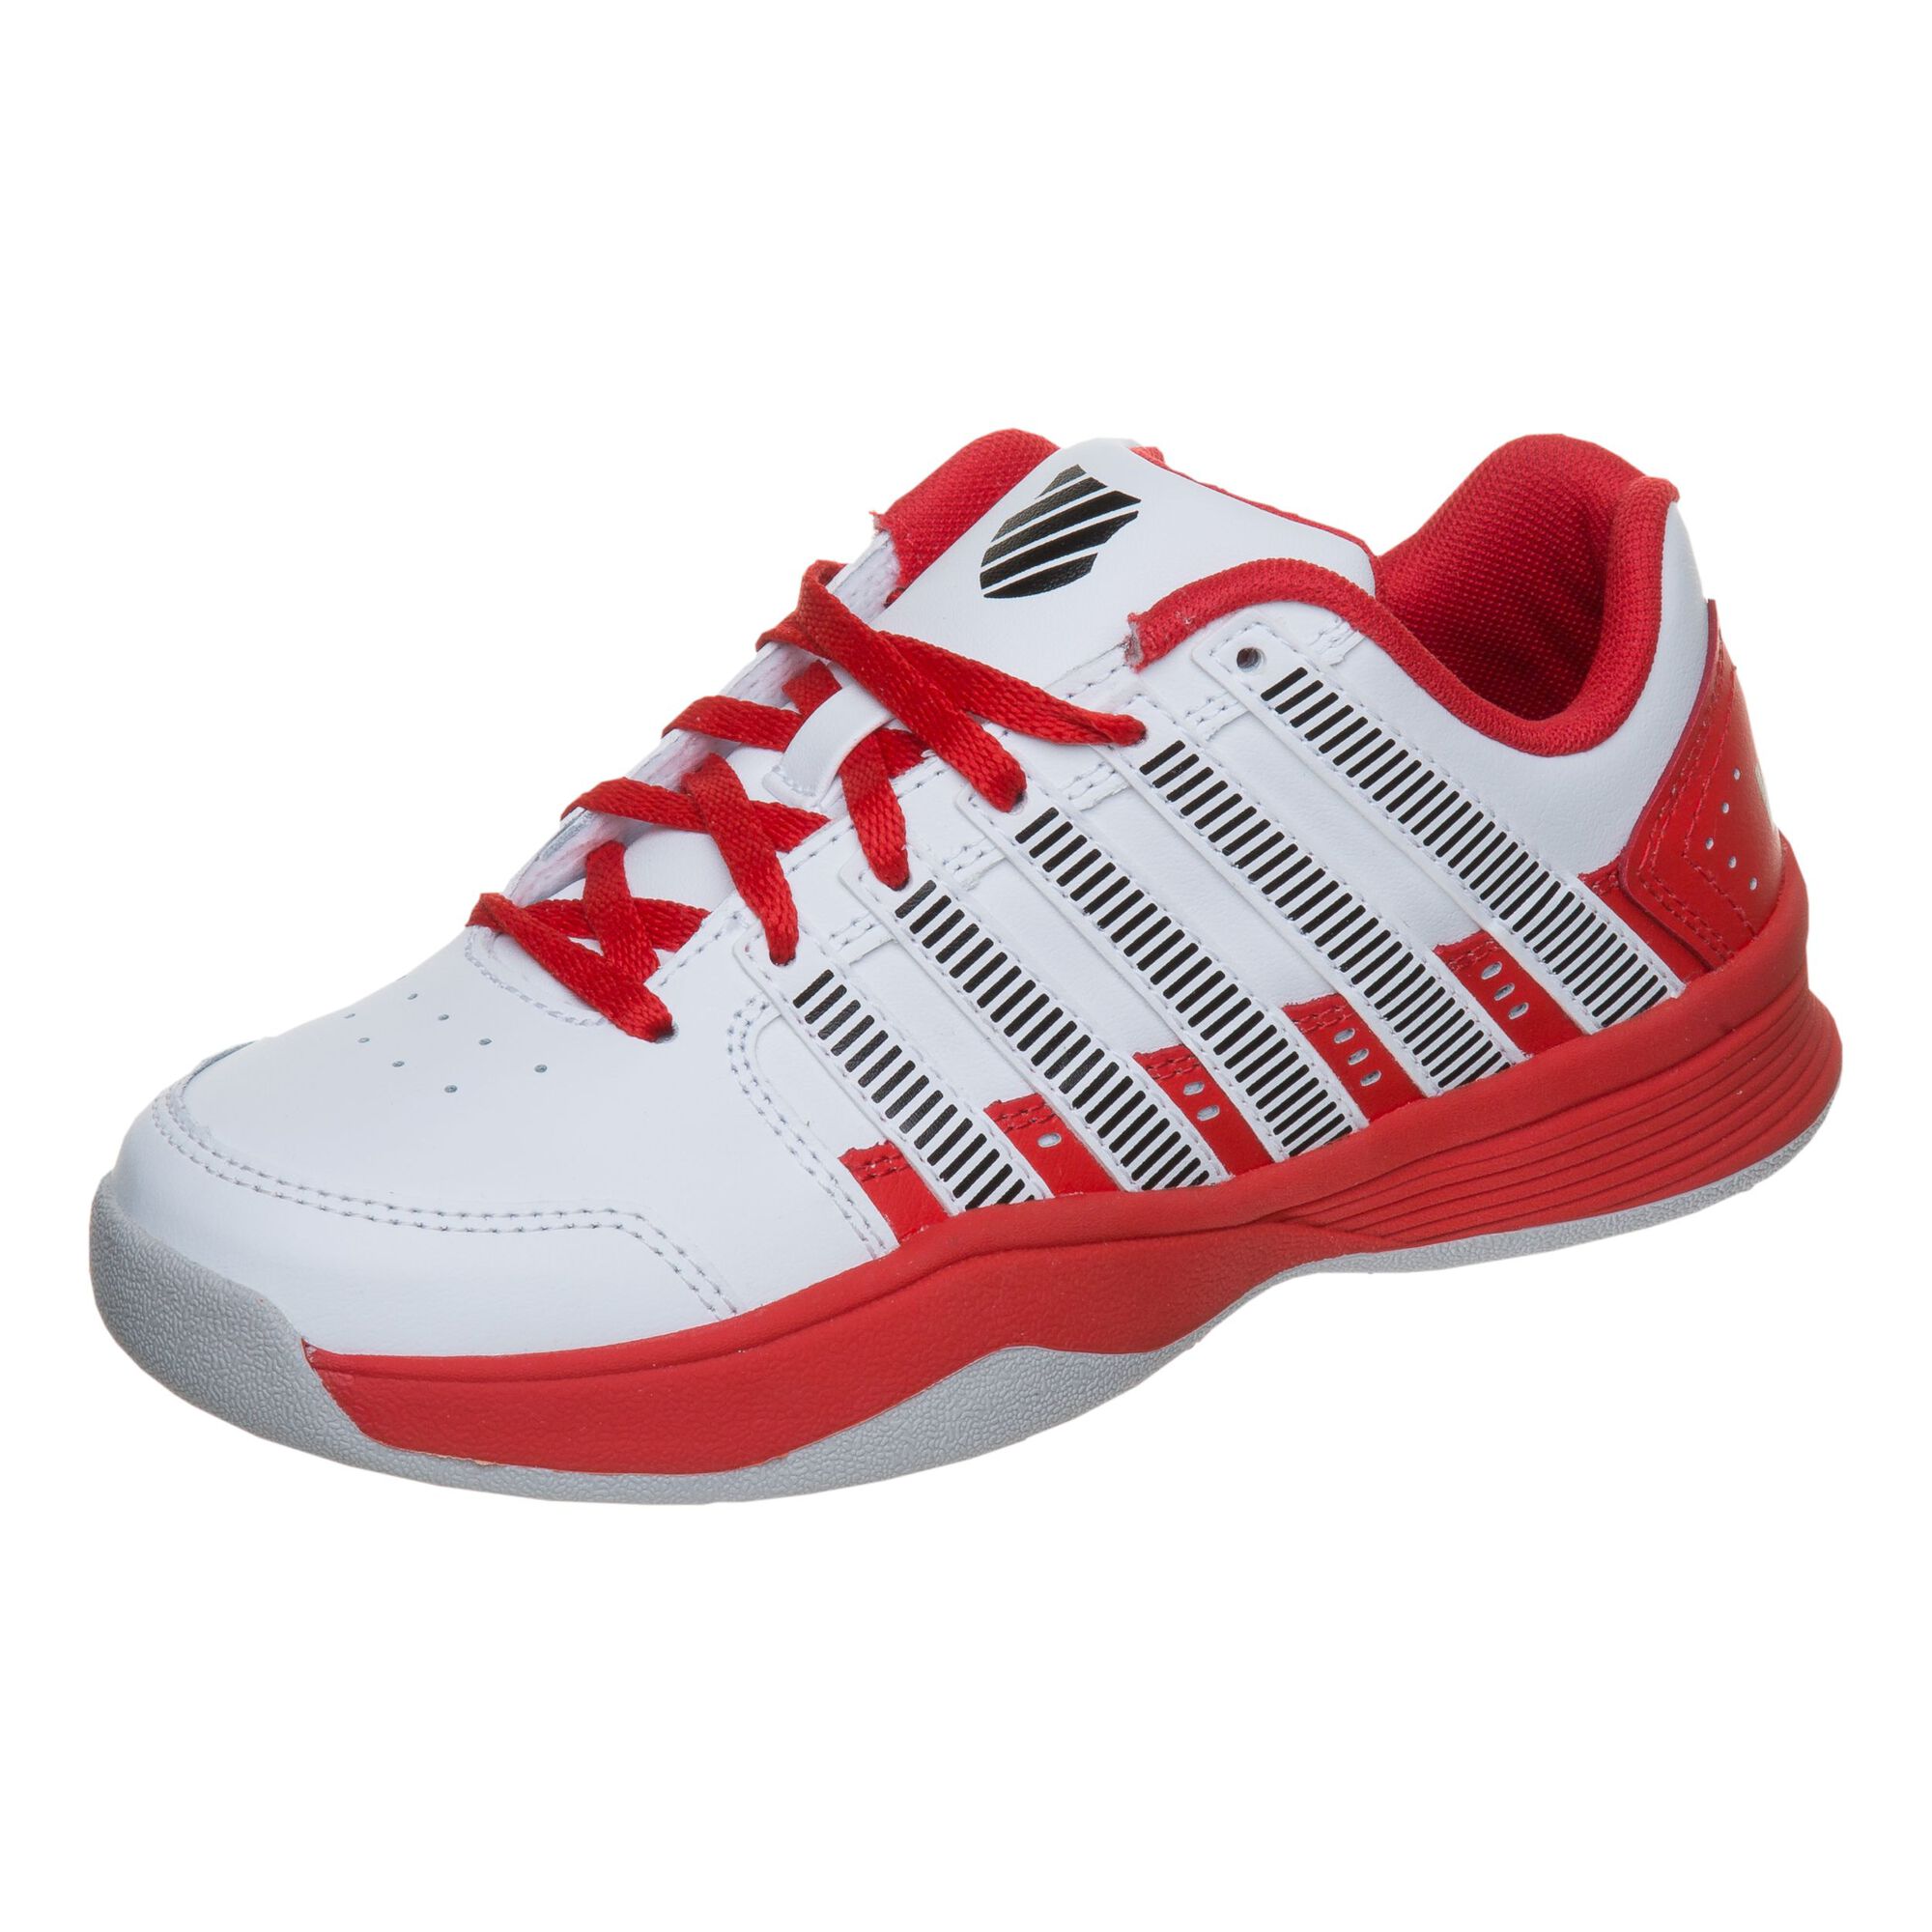 Geruststellen Trots tevredenheid buy K-Swiss Court Impact Leather Carpet Shoe Kids - White, Red online |  Tennis-Point